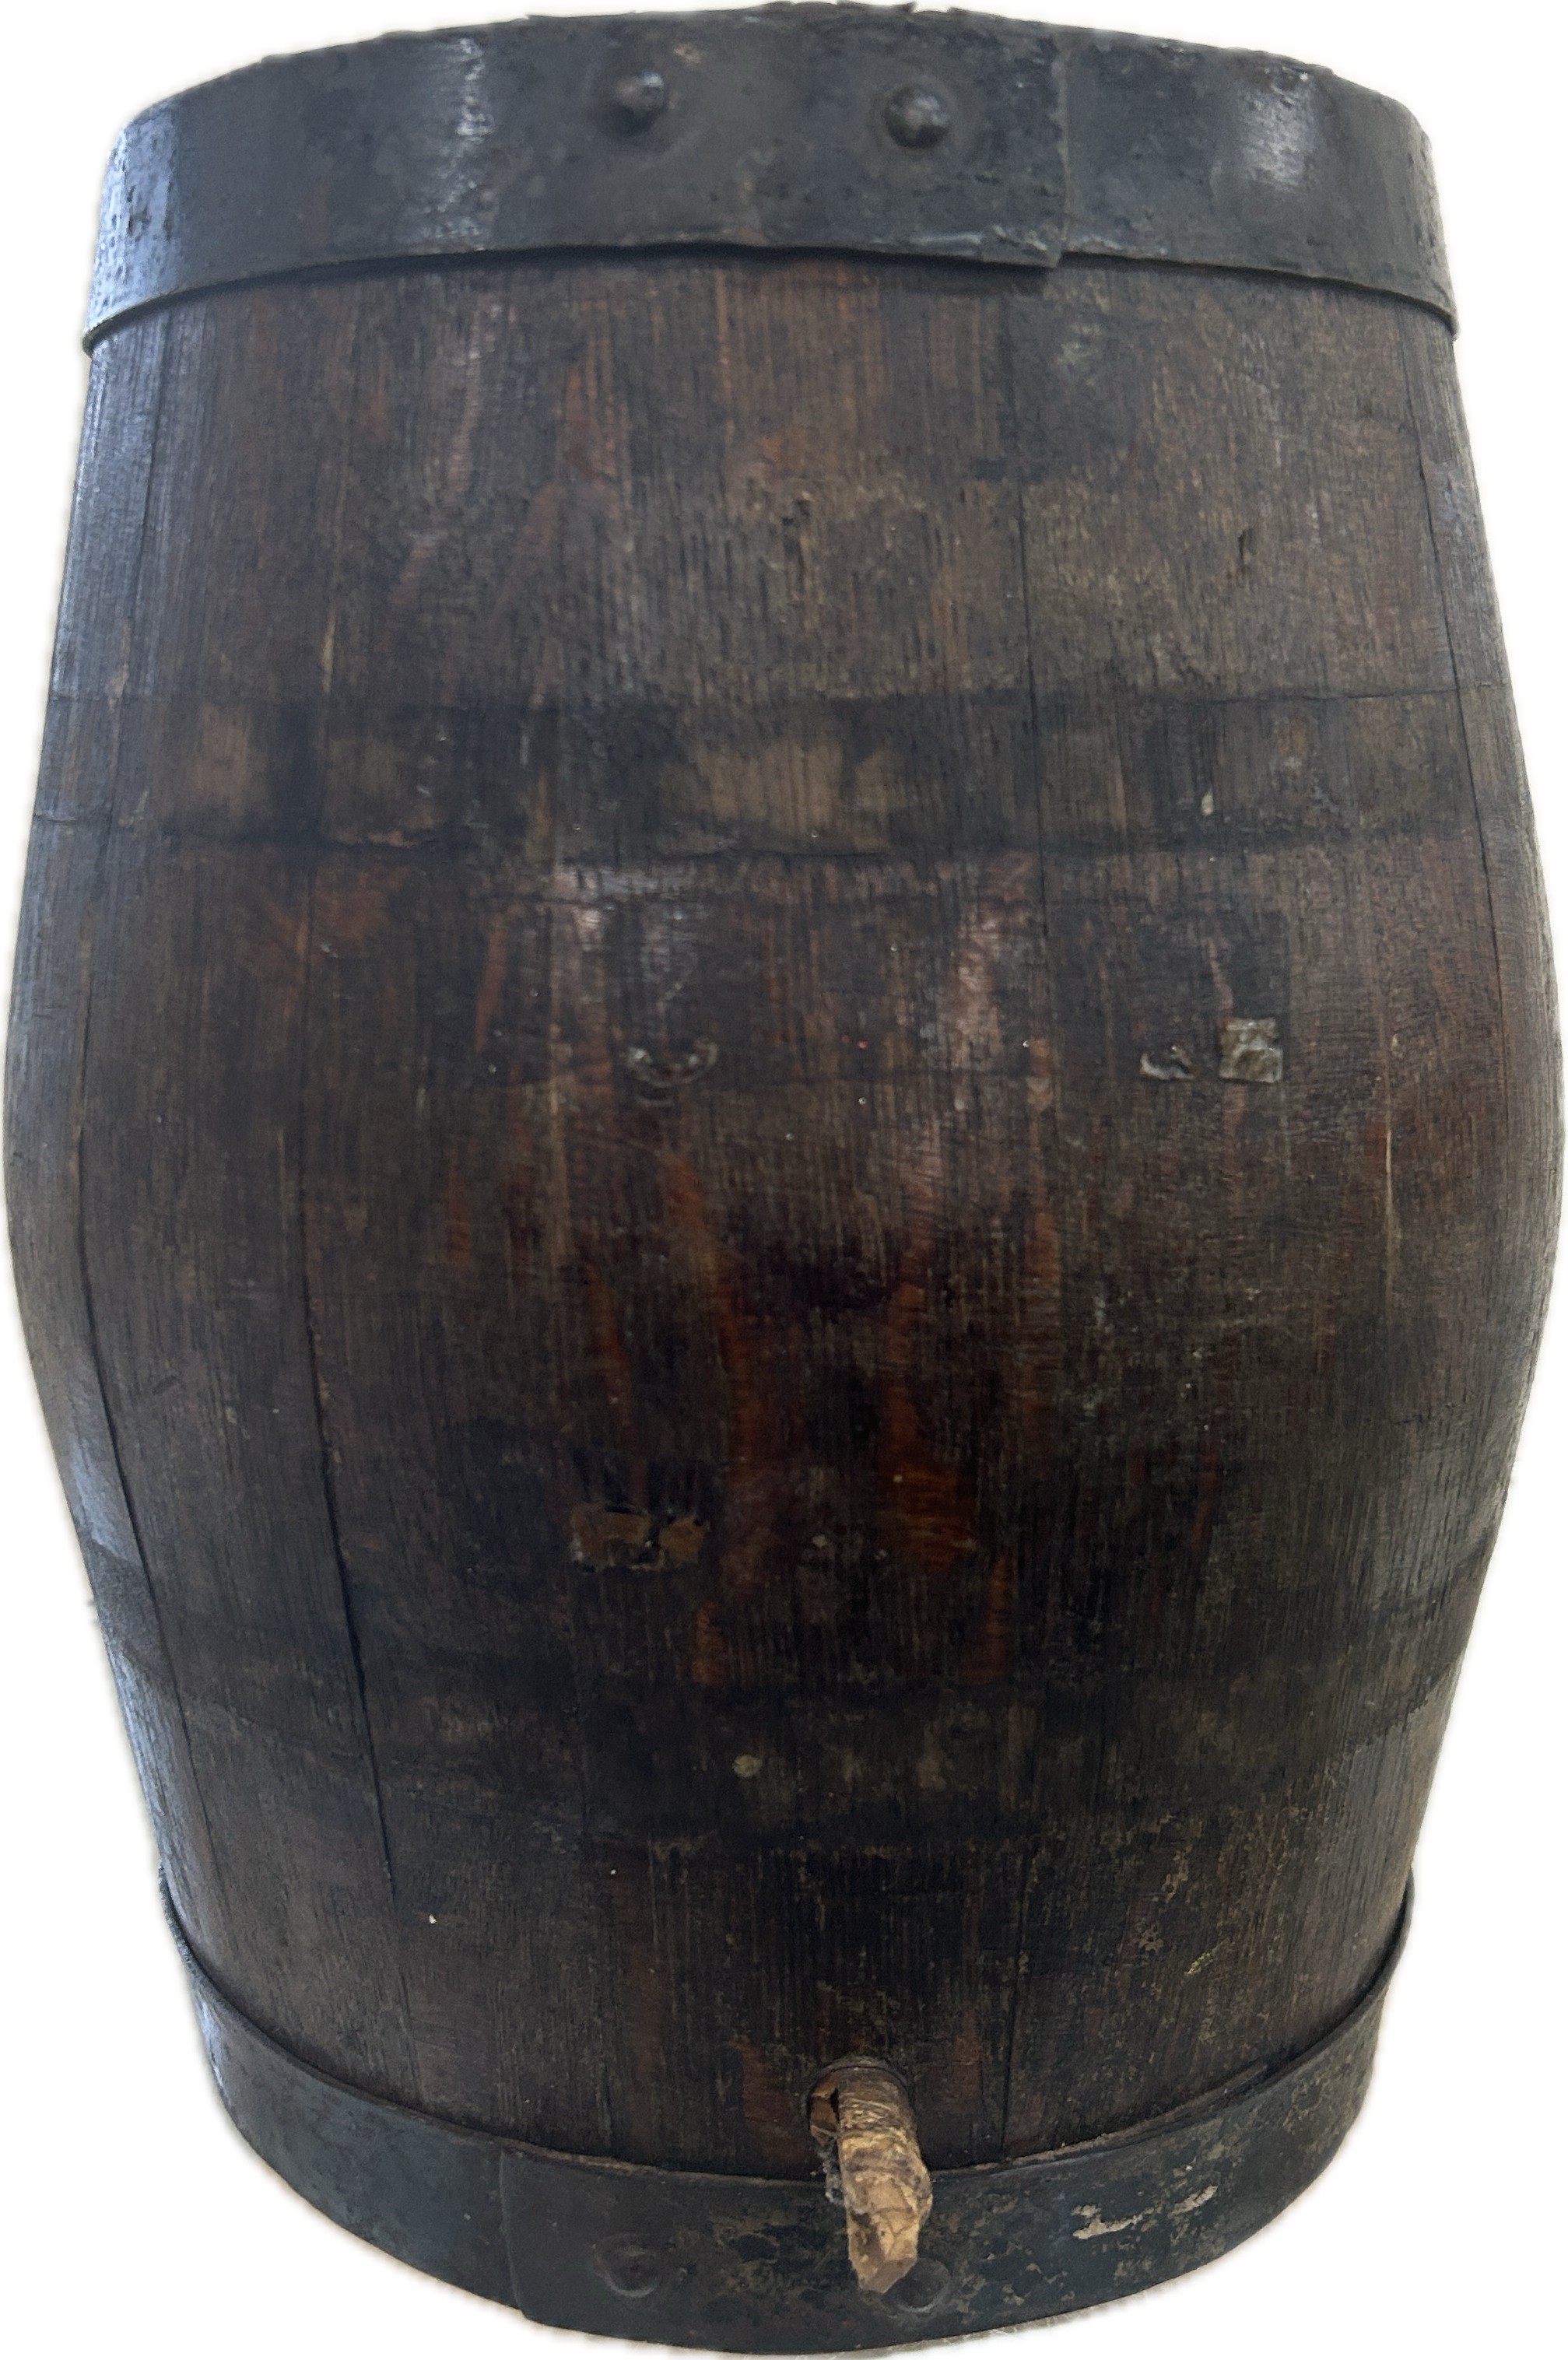 Vintage brandy barrel seat, approximate height 35cm, diameter 23cm